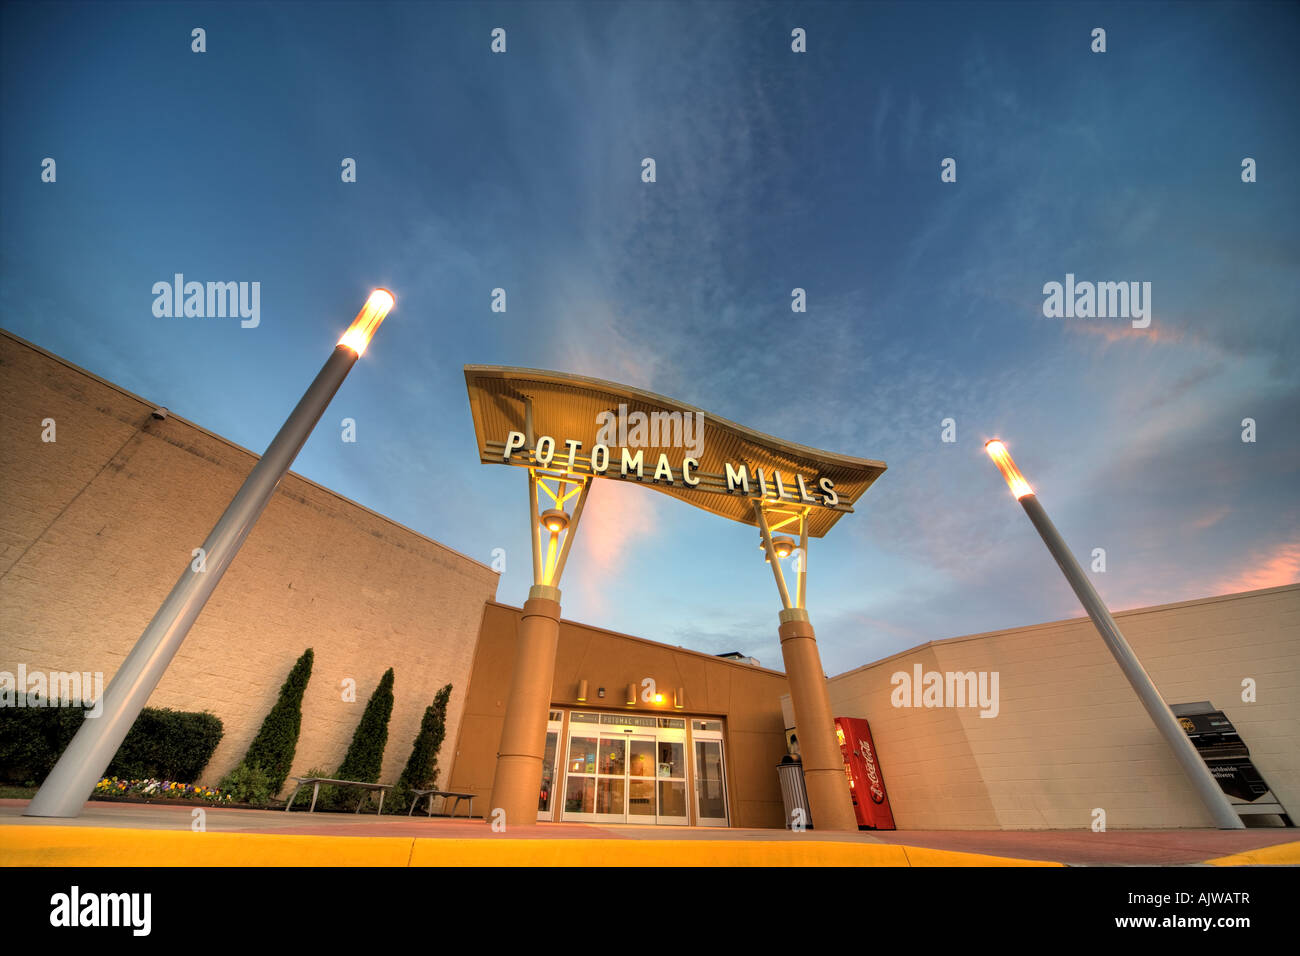 Potomac mills mall washington hi-res stock photography and images - Alamy